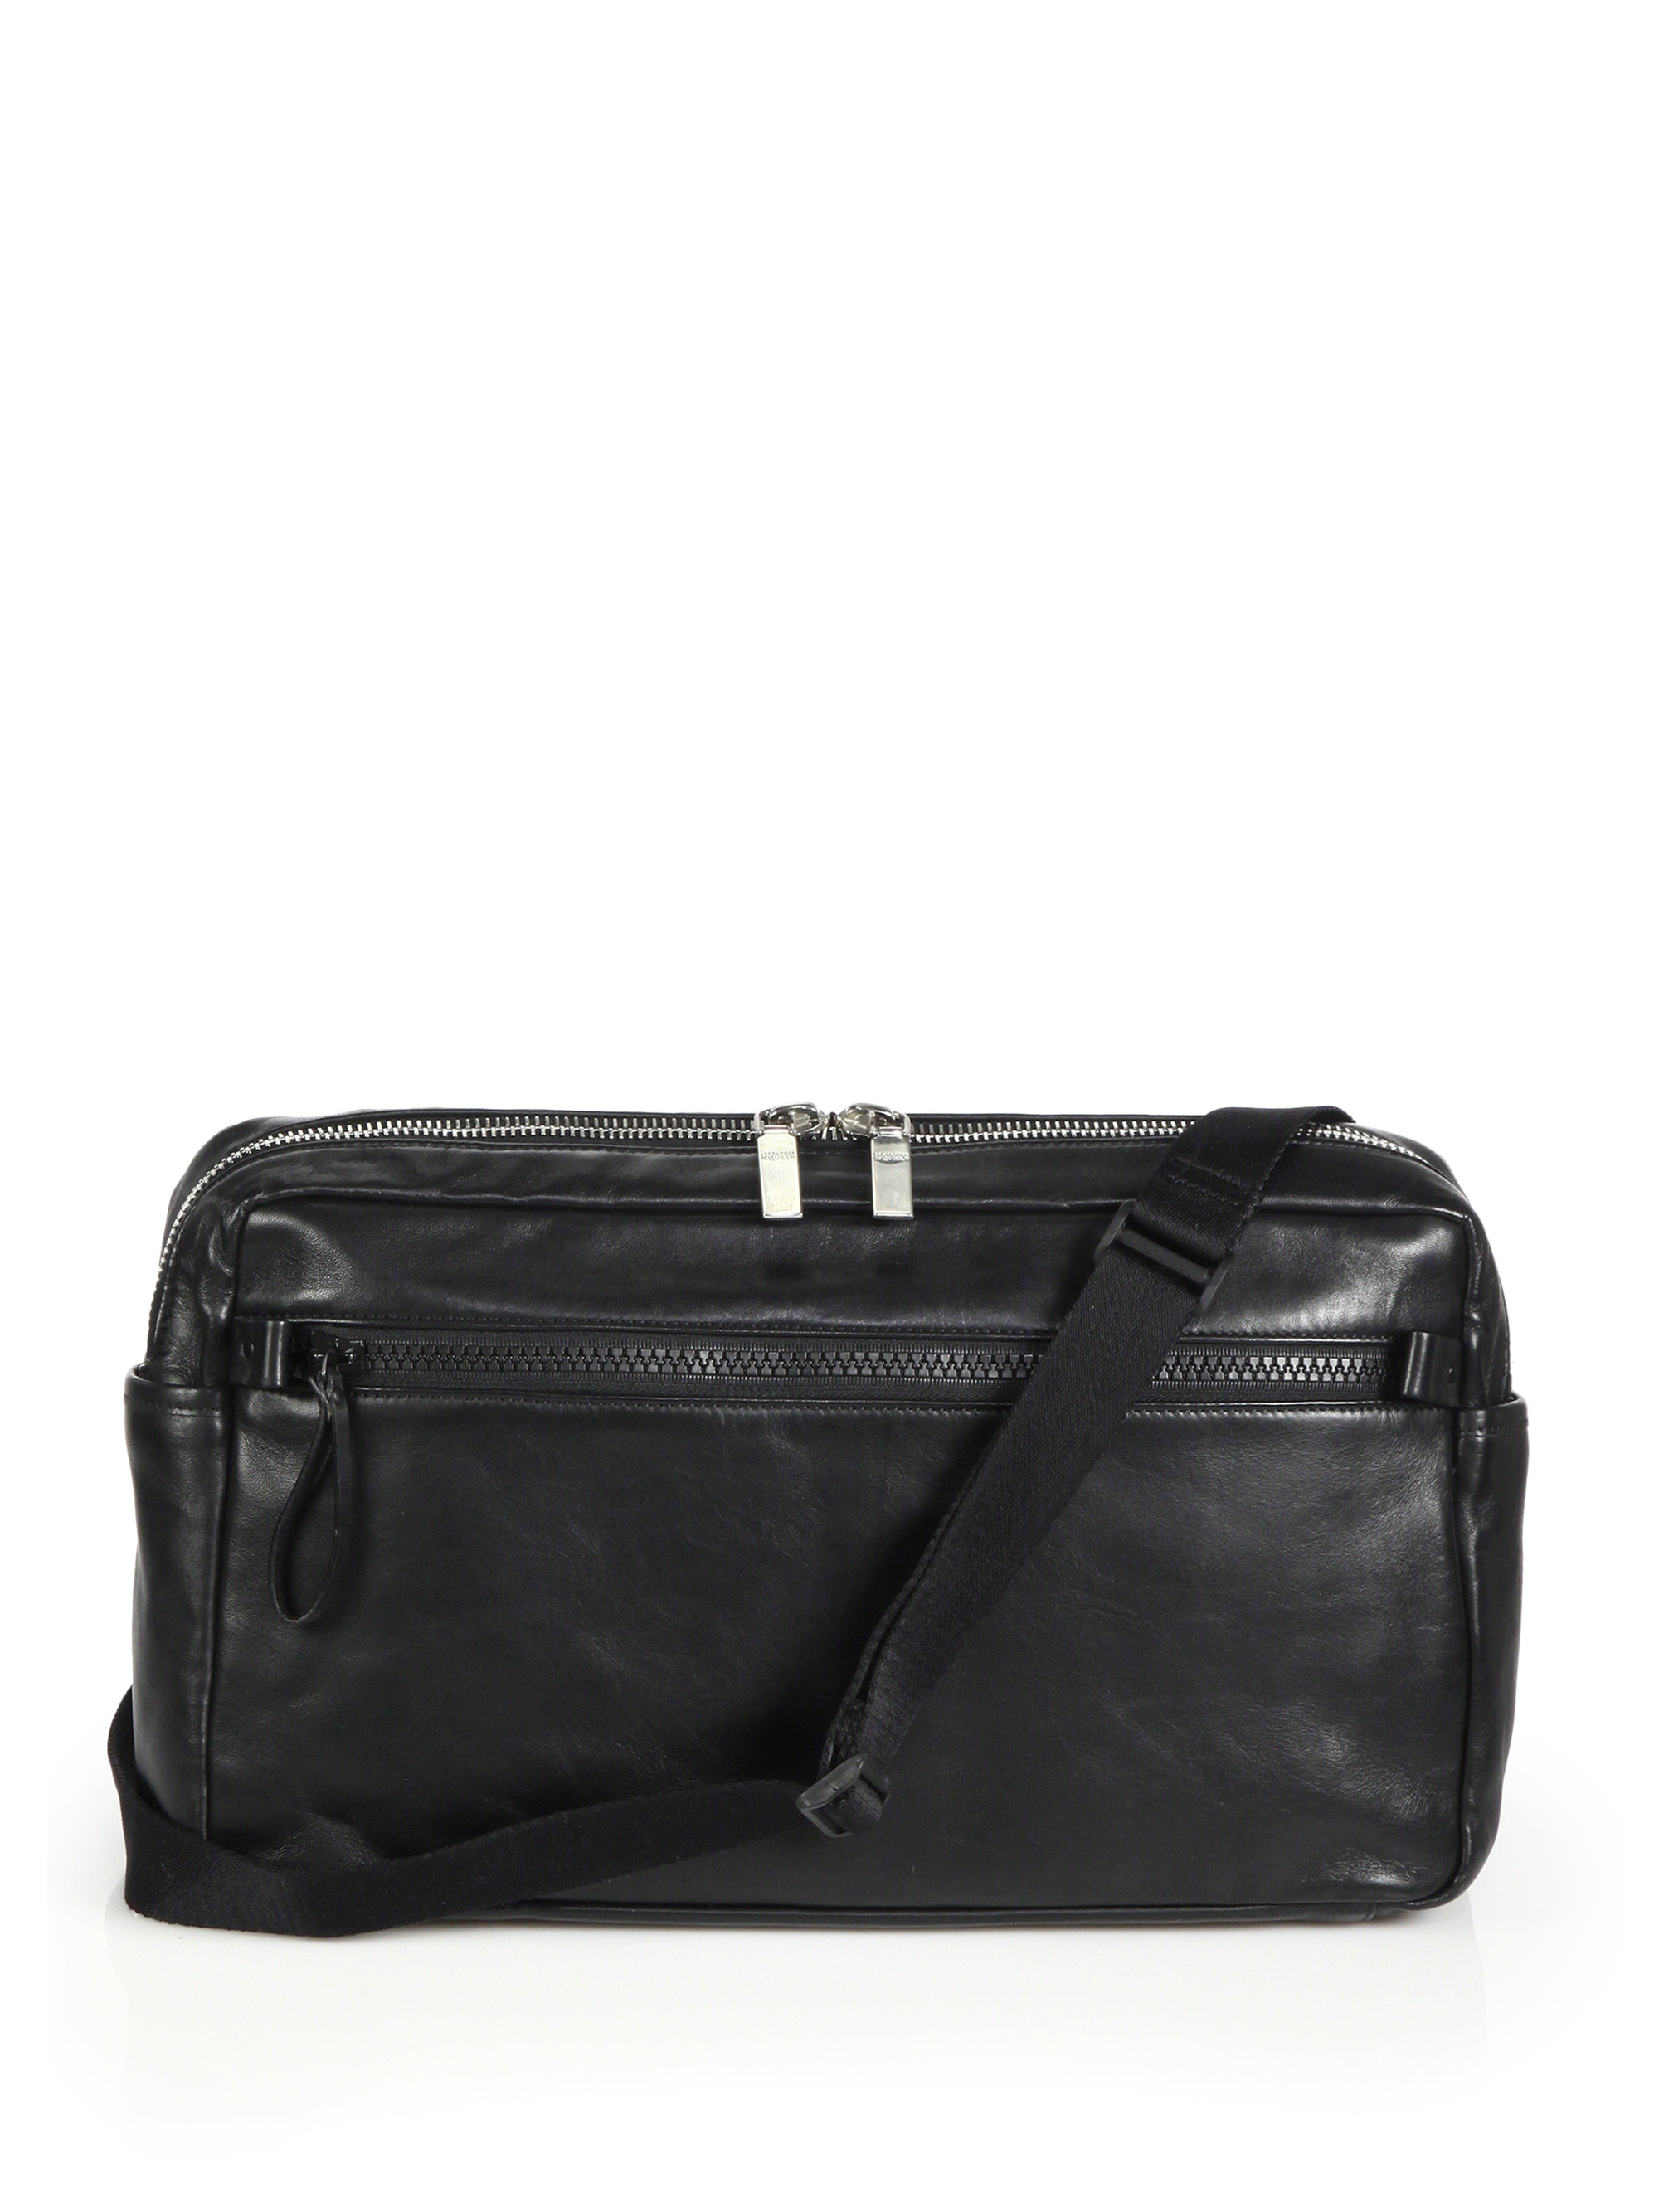 Lyst - Alexander mcqueen Leather Tech Crossbody Bag in Black for Men